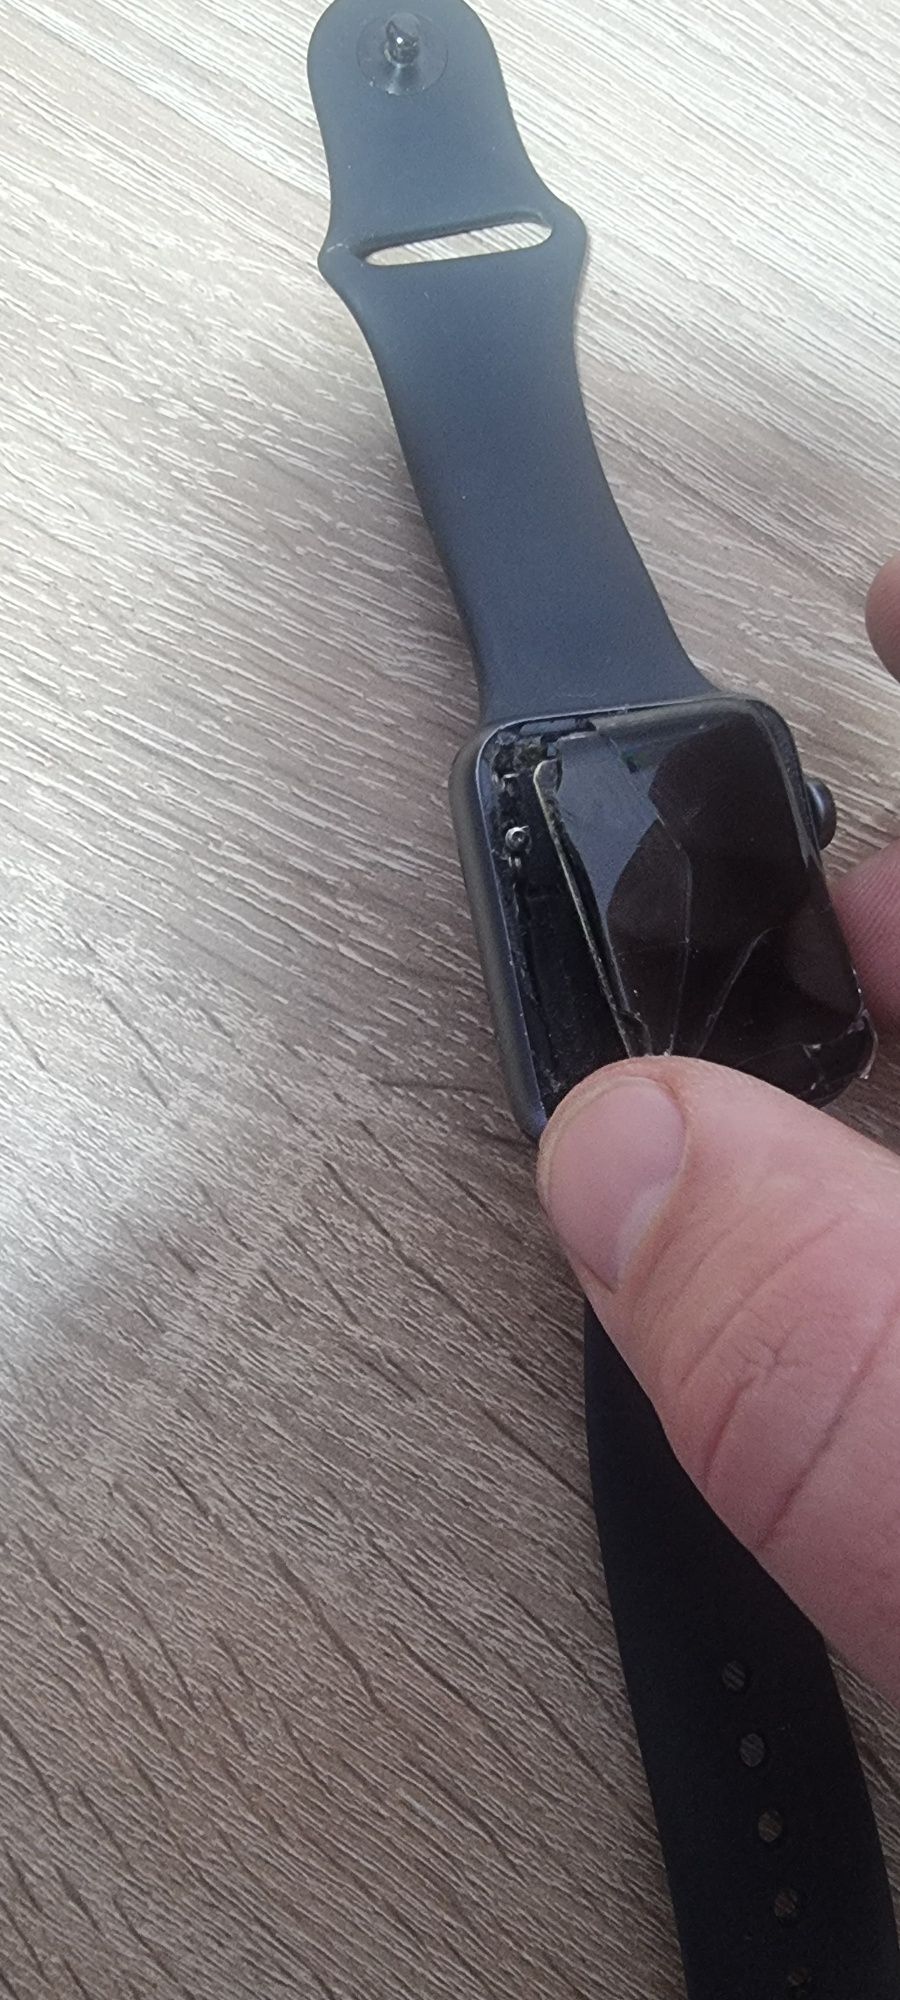 Apple watch 3 defect